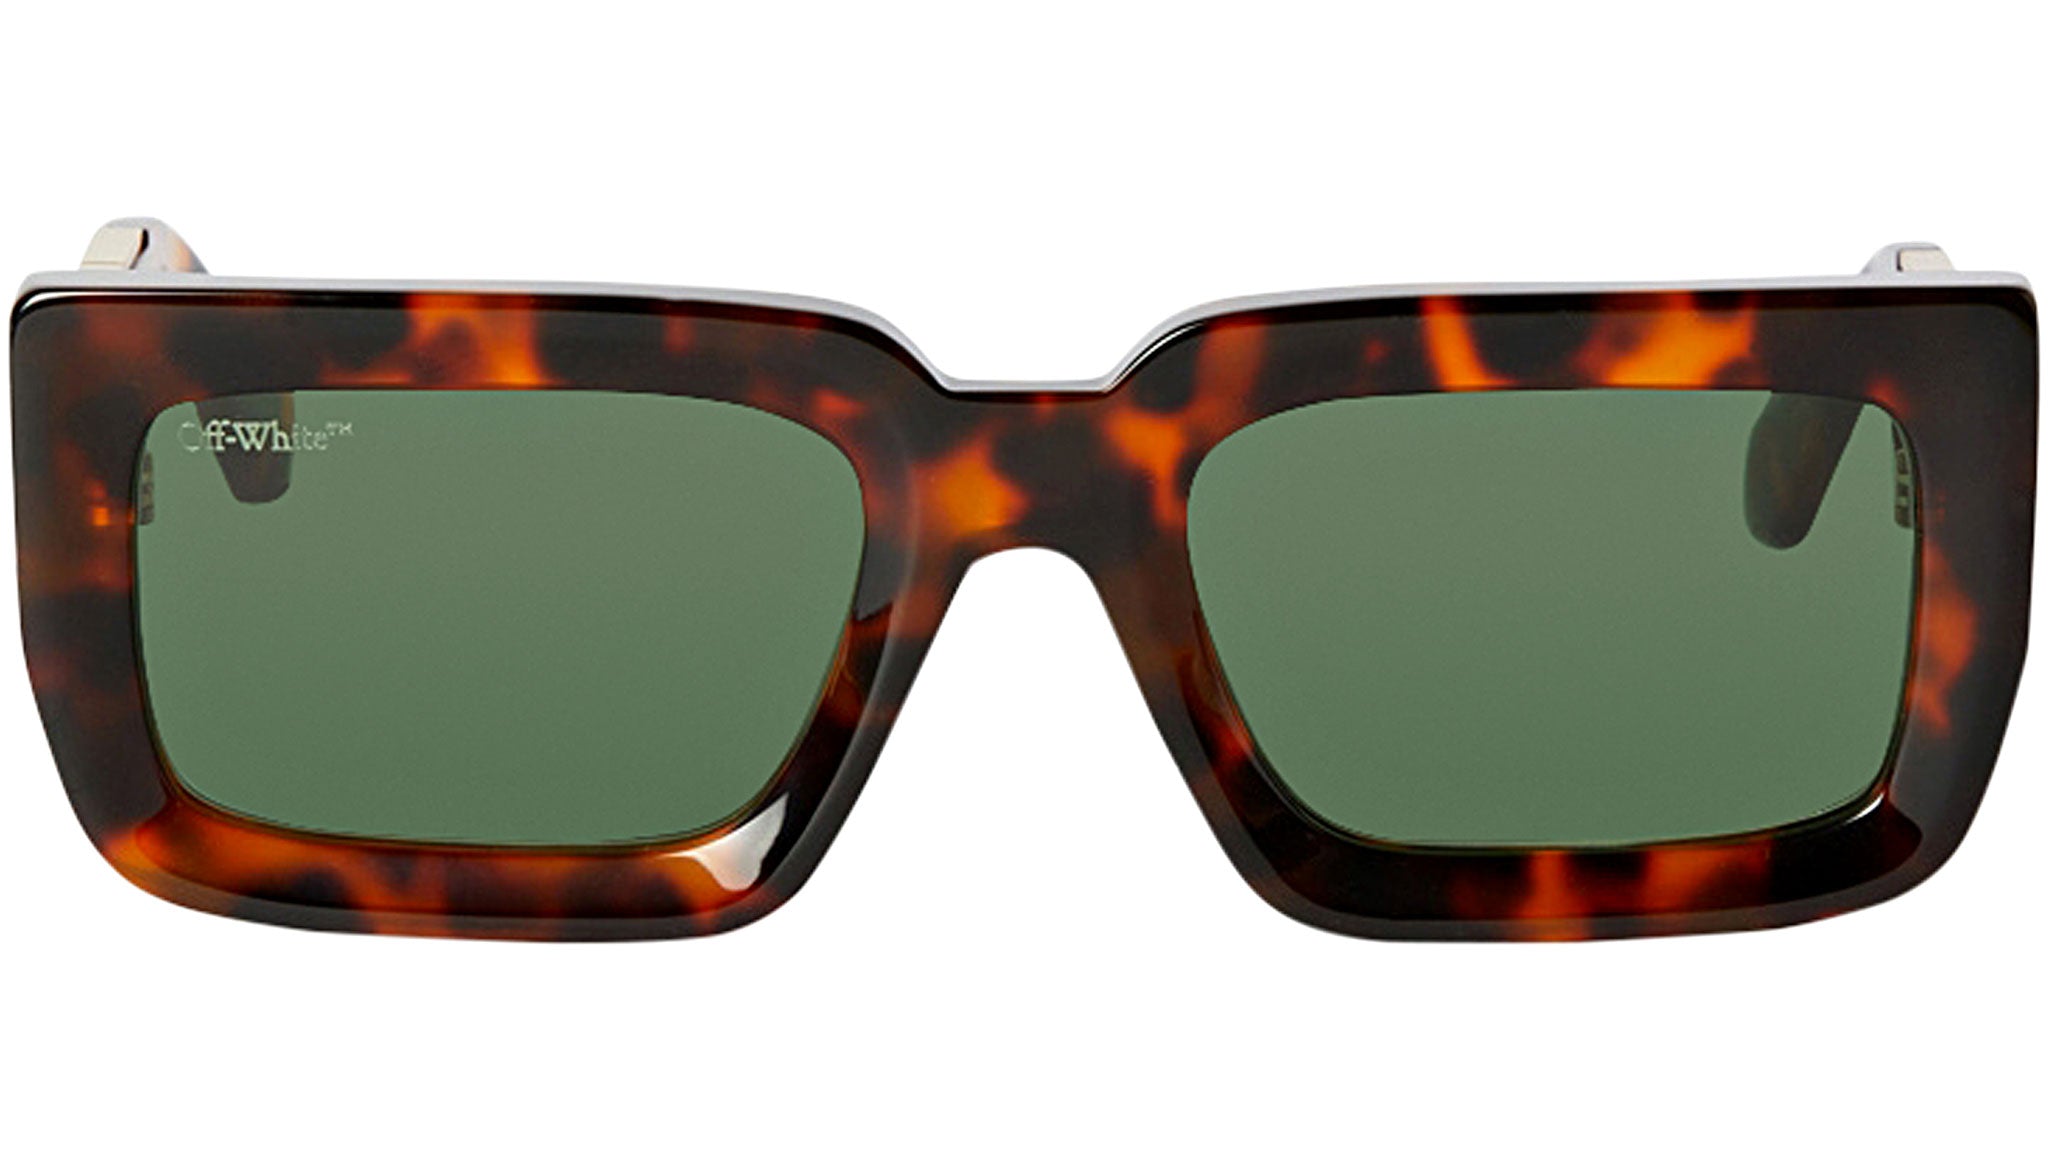 Boston squared acetate sunglasses - Off-White - Men